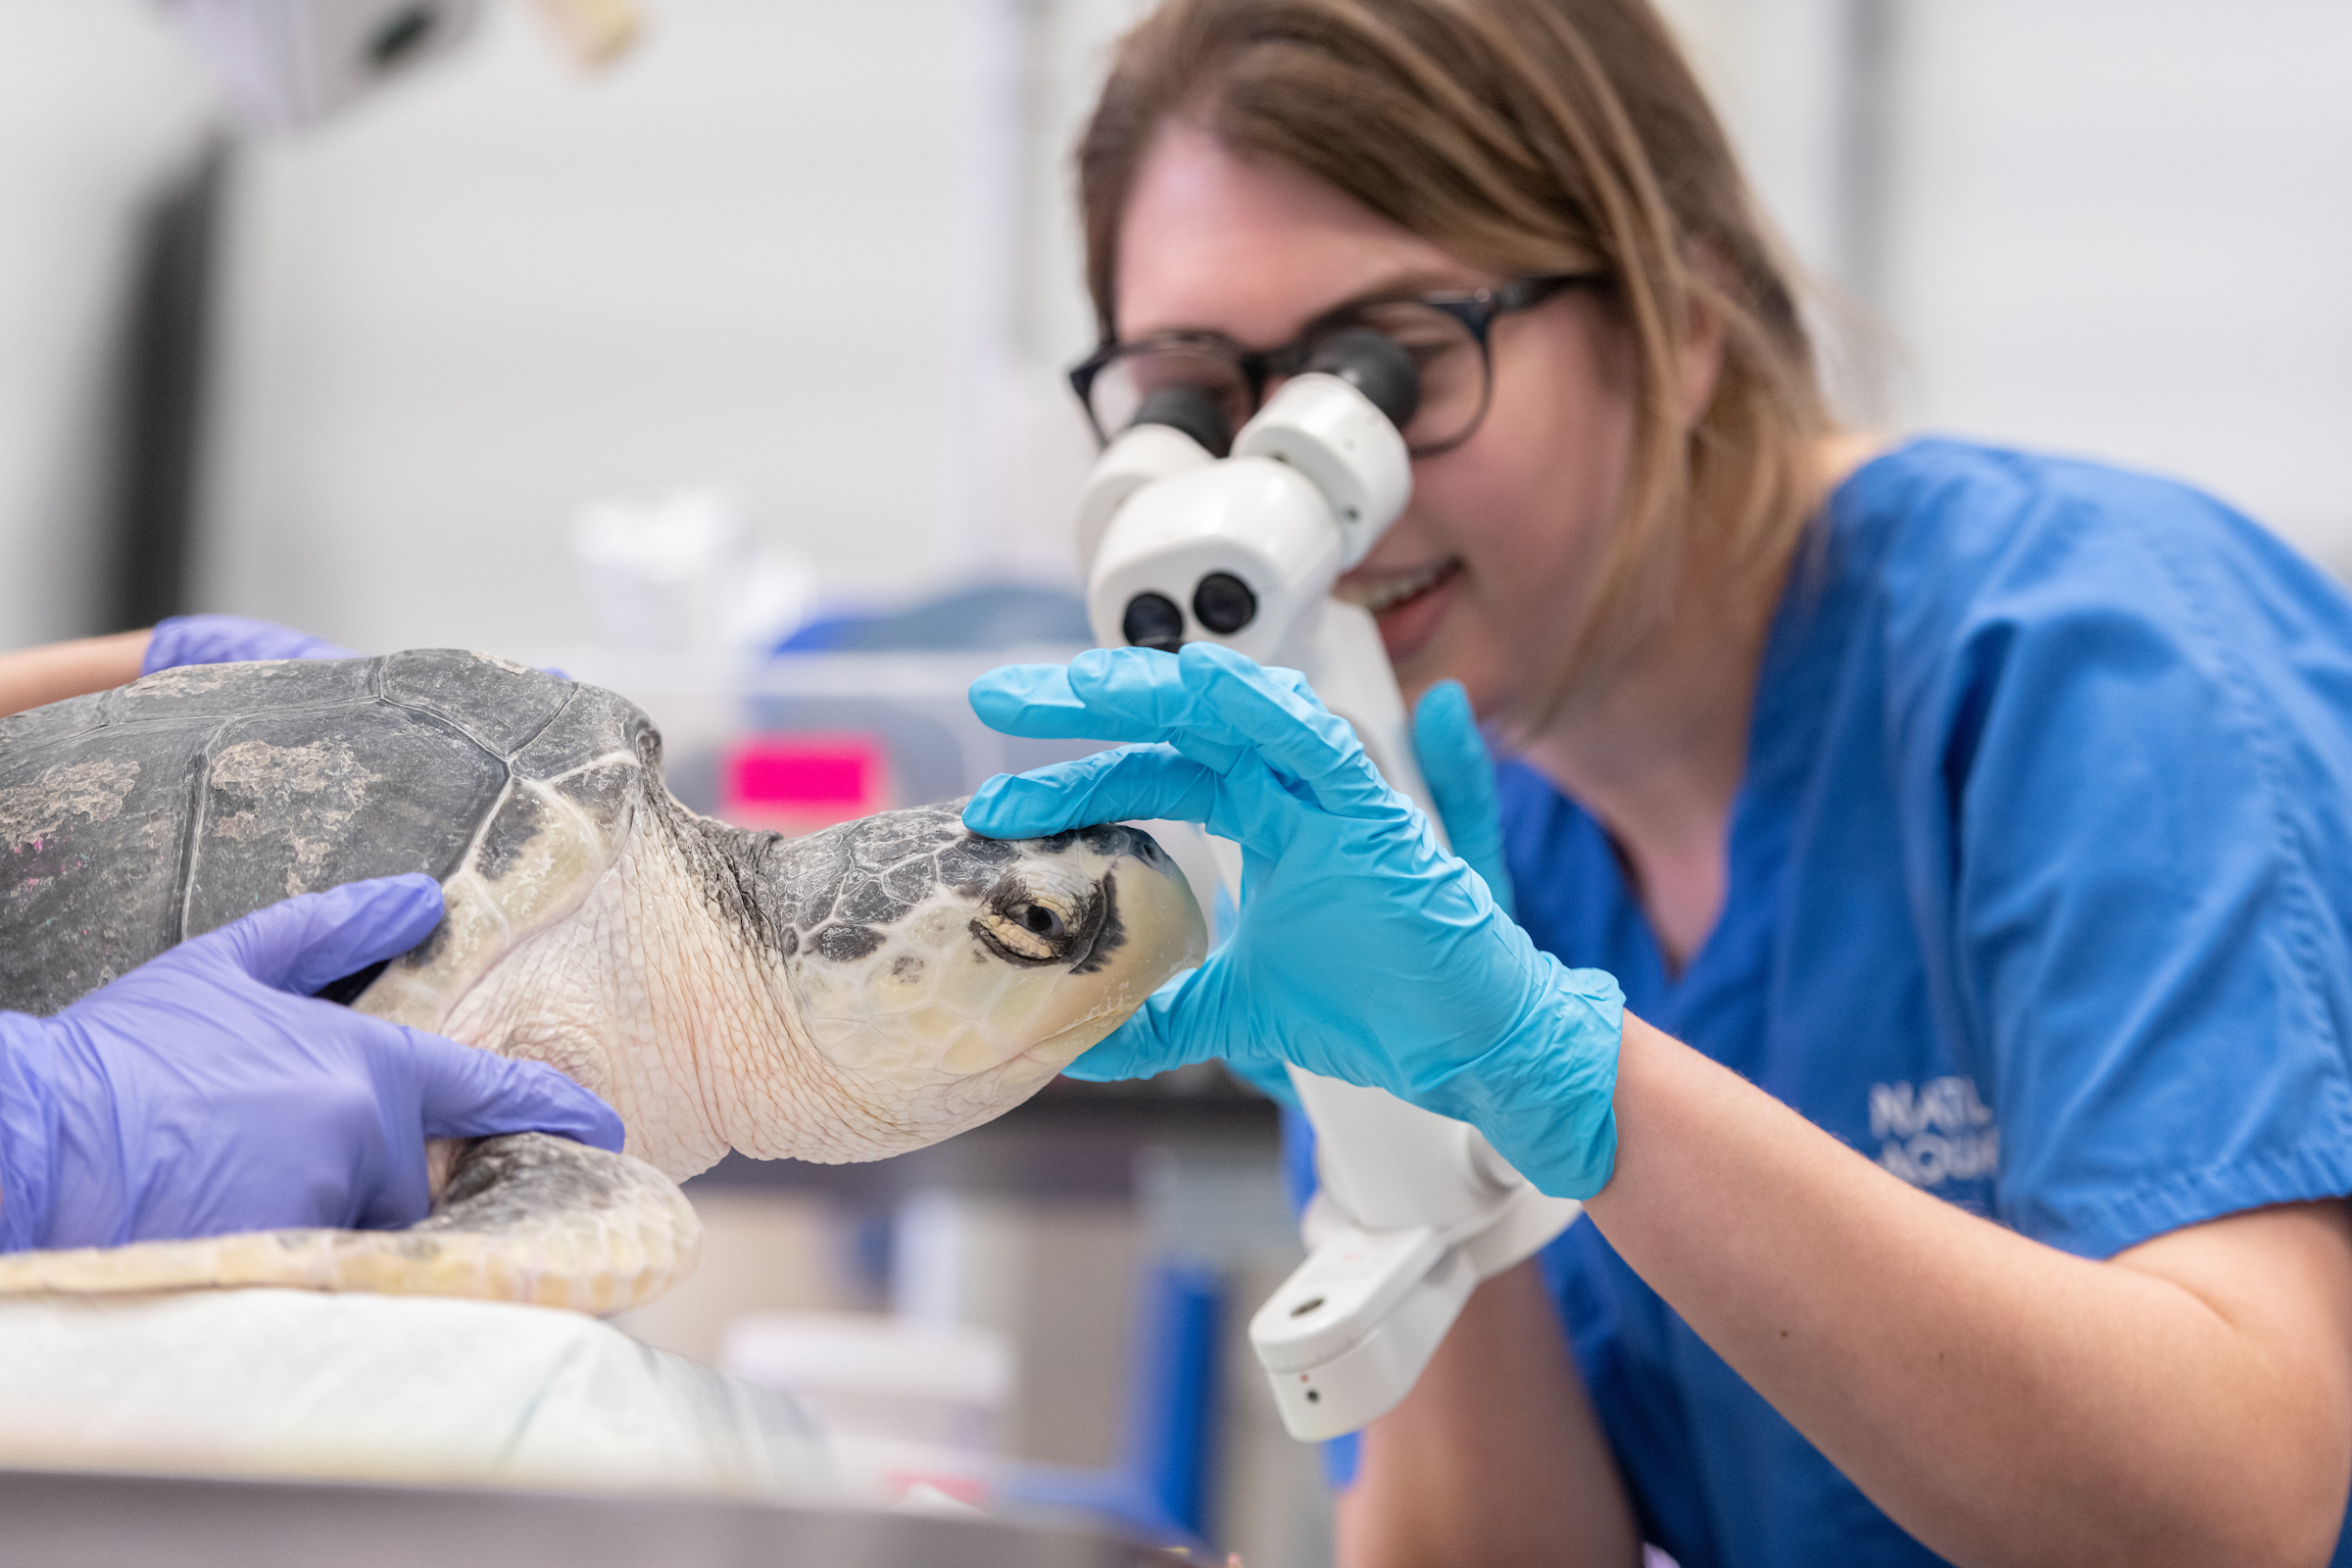 Sarah Balik examines a sea turtle.